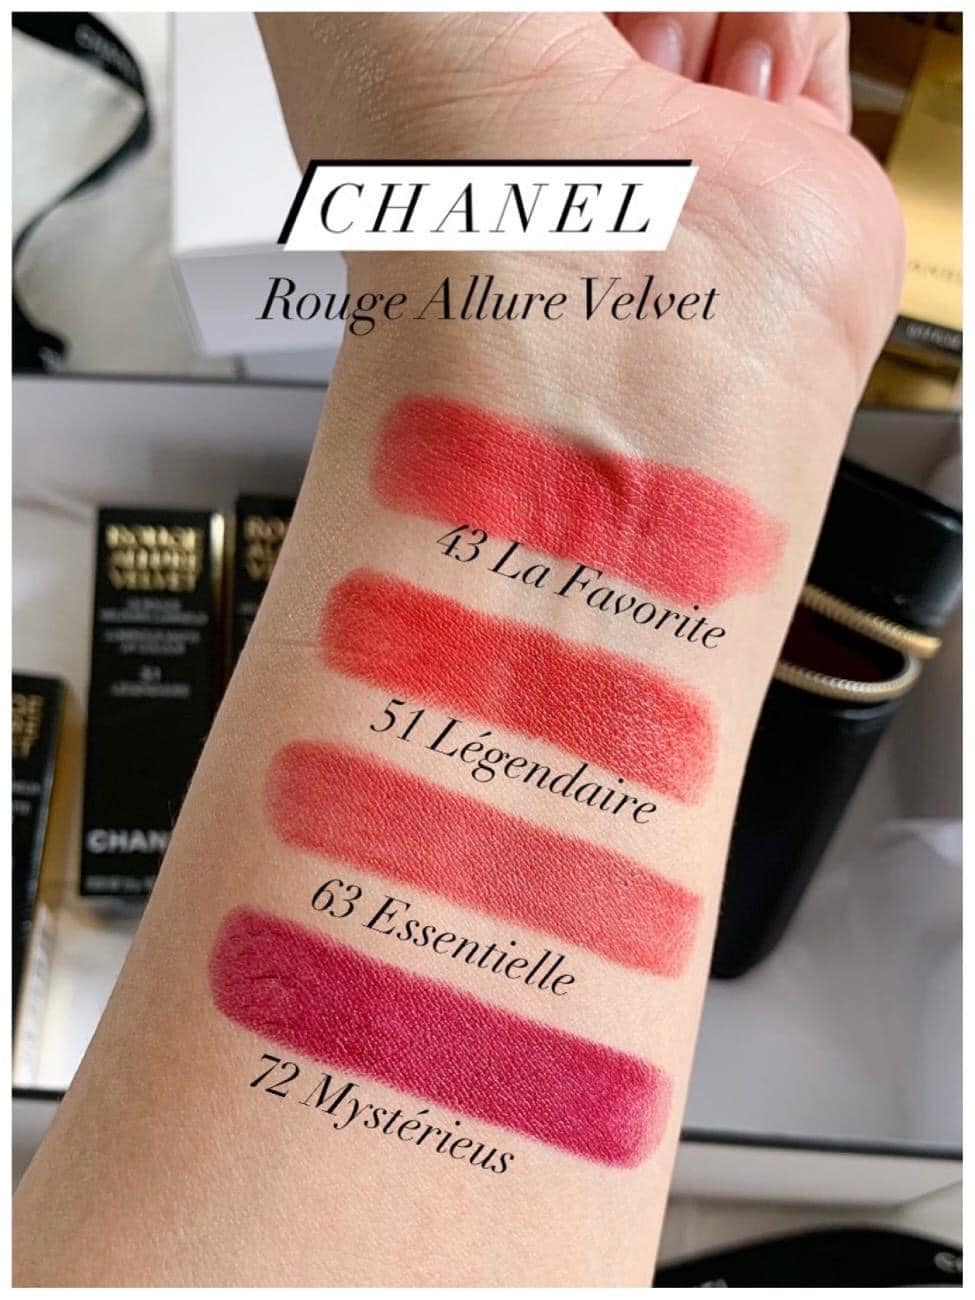 Son Chanel Rouge Allure Velvet 37 LExuberante  Mỹ Phẩm Hàng Hiệu Pháp   Paris in your bag